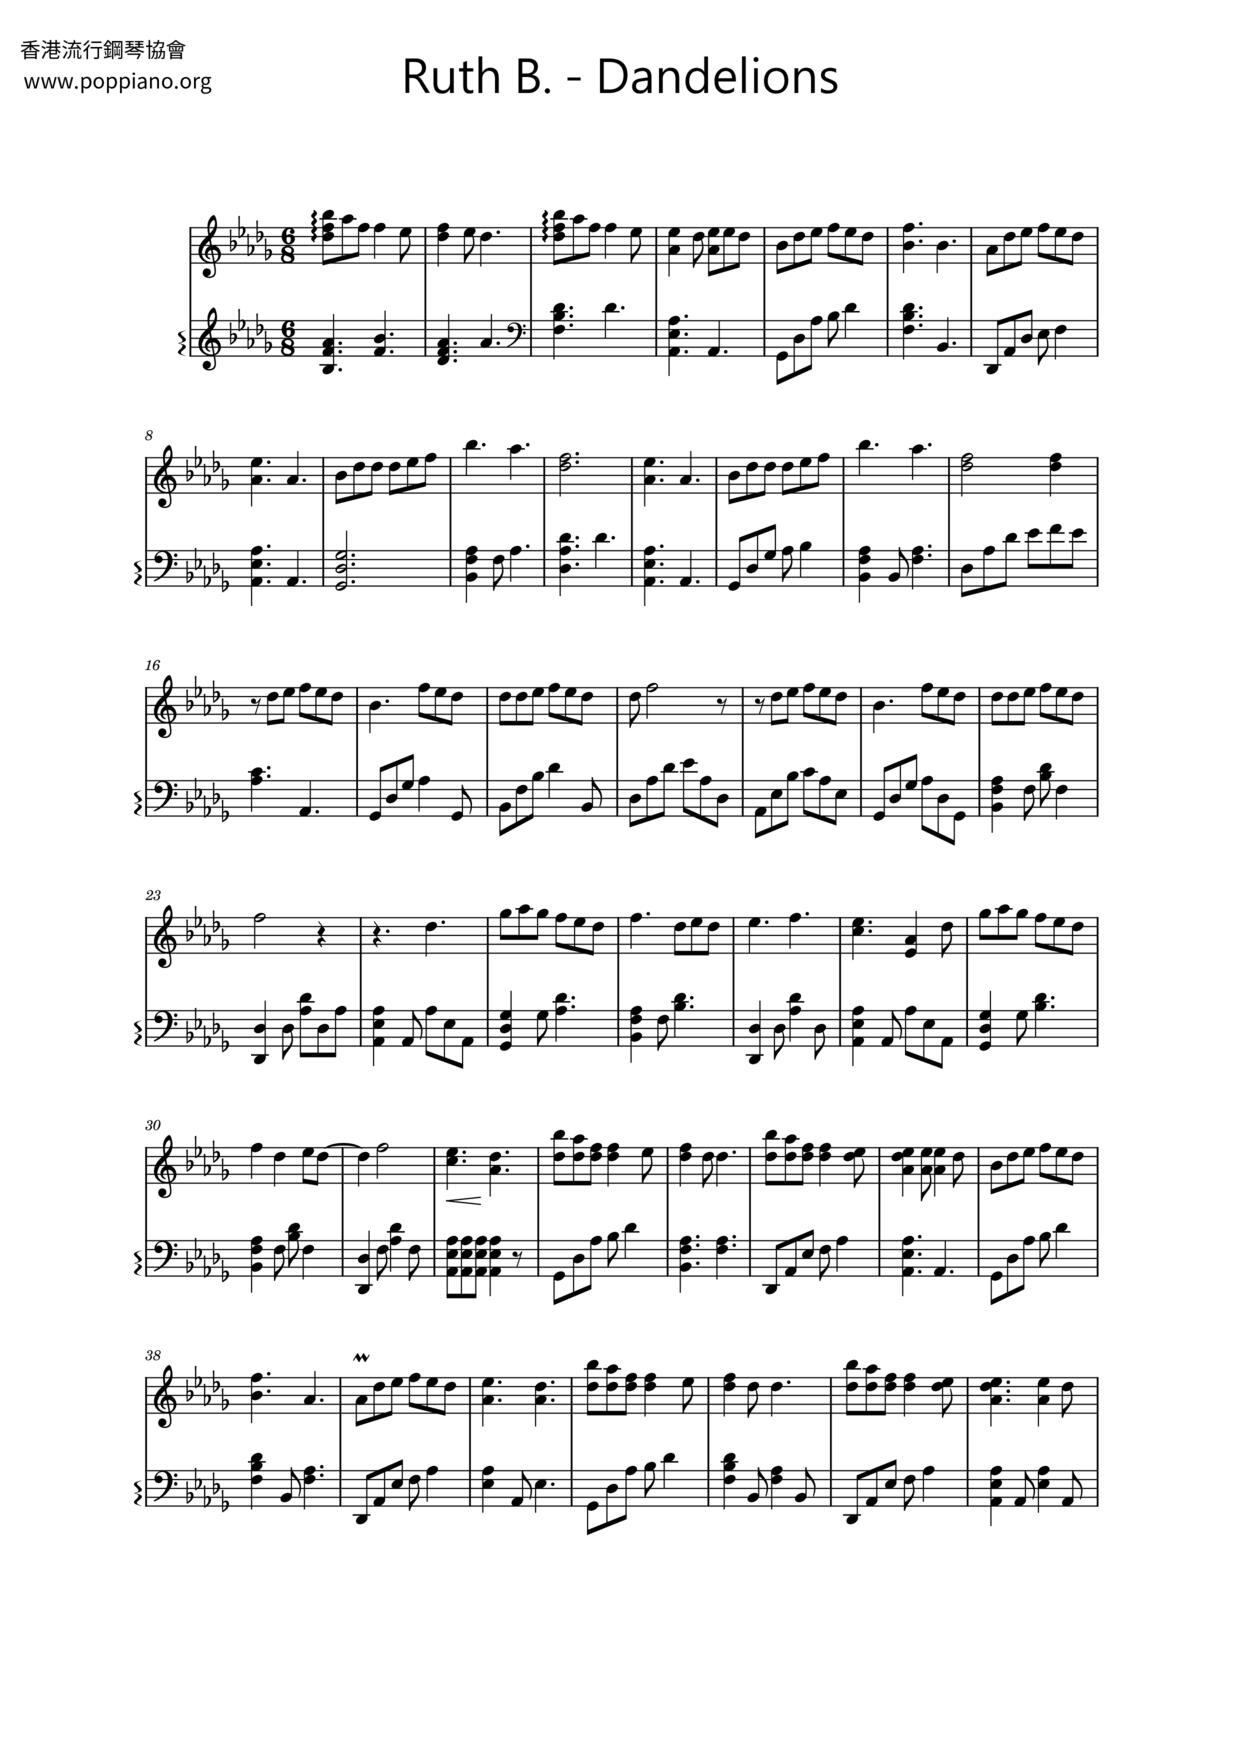 Dandelionsピアノ譜